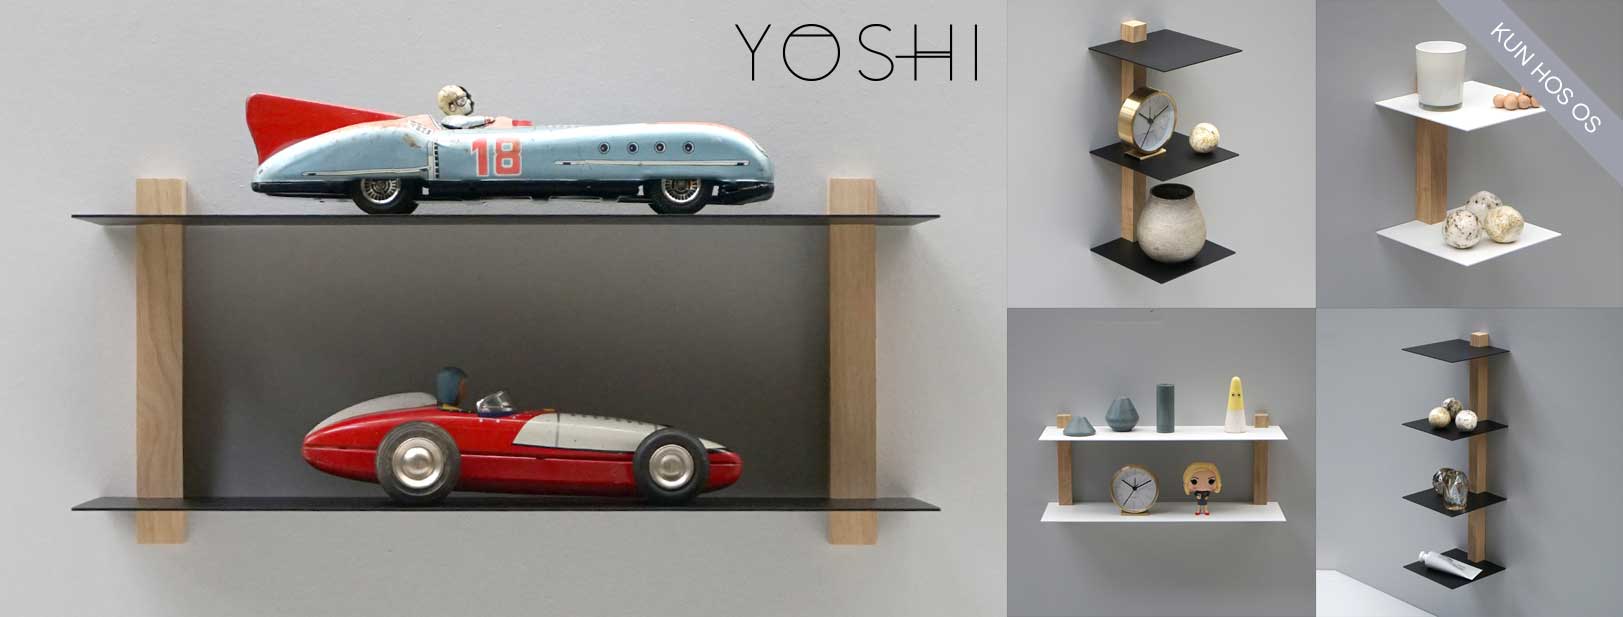 Yoshi - dansk design